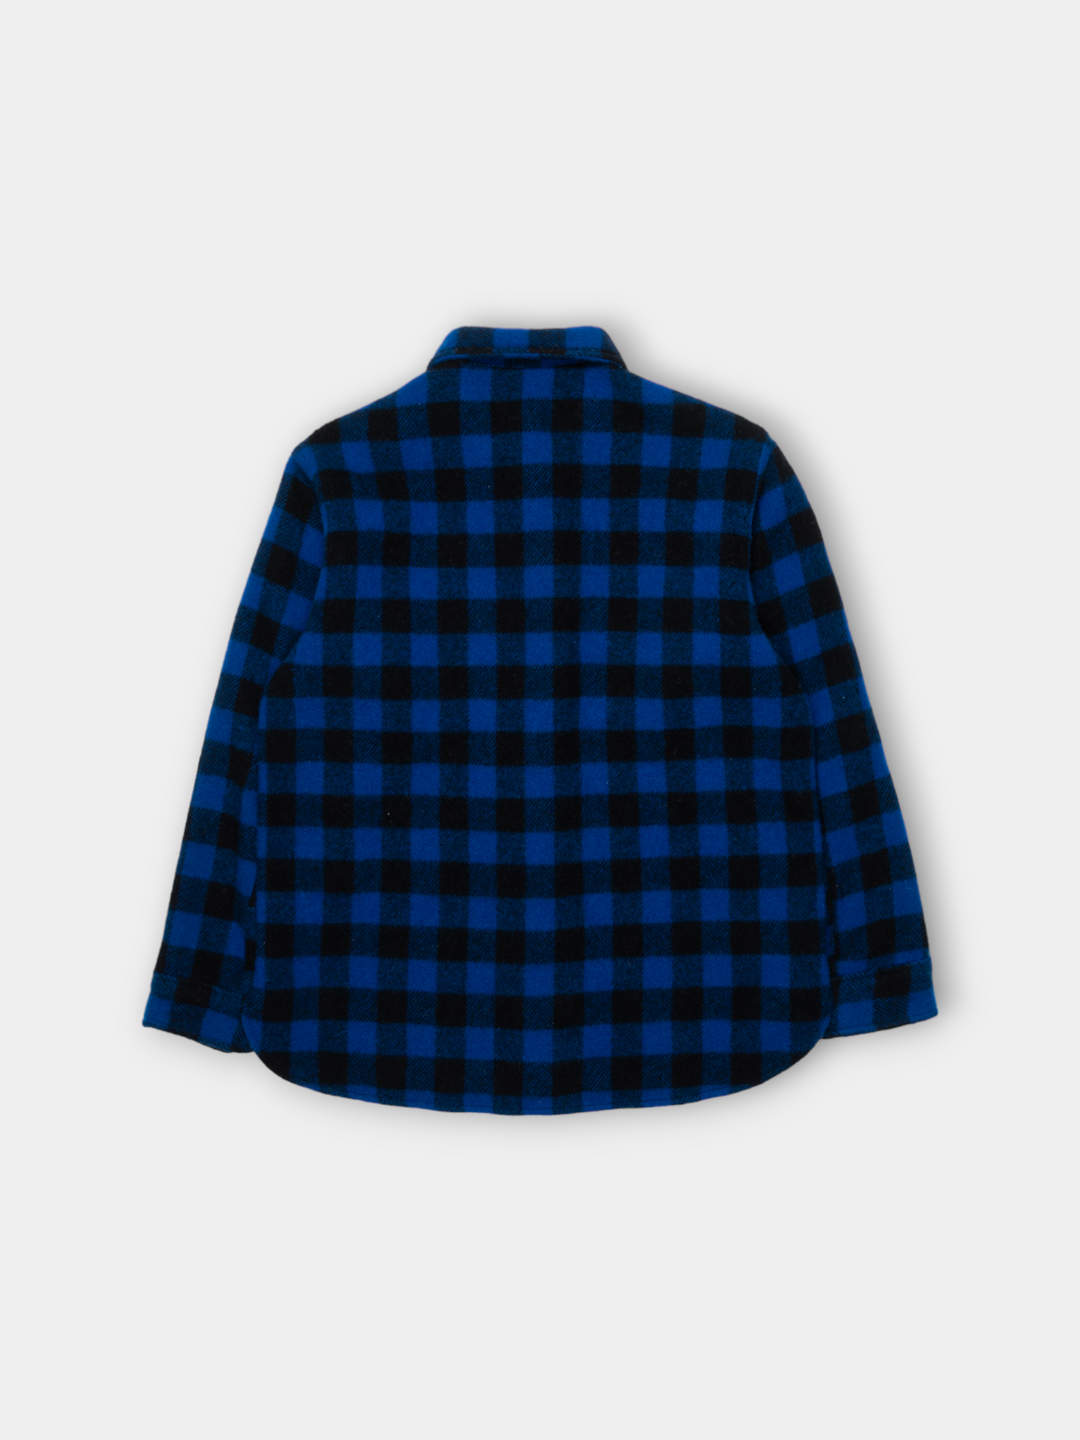 Vintage Woolrich Heavy Flannel Shirt (M)